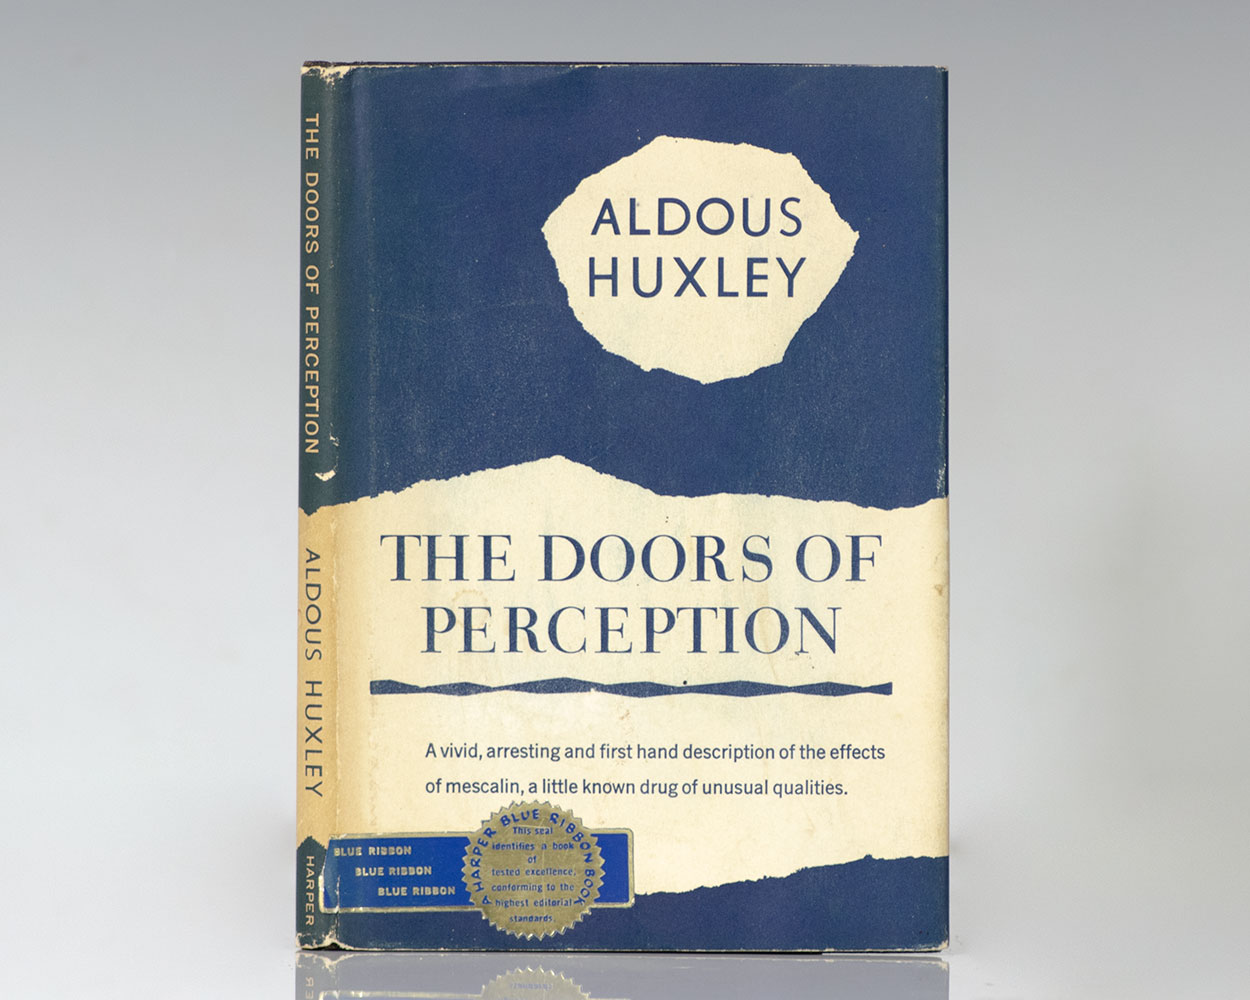 The Doors of Perception (album) - Wikipedia